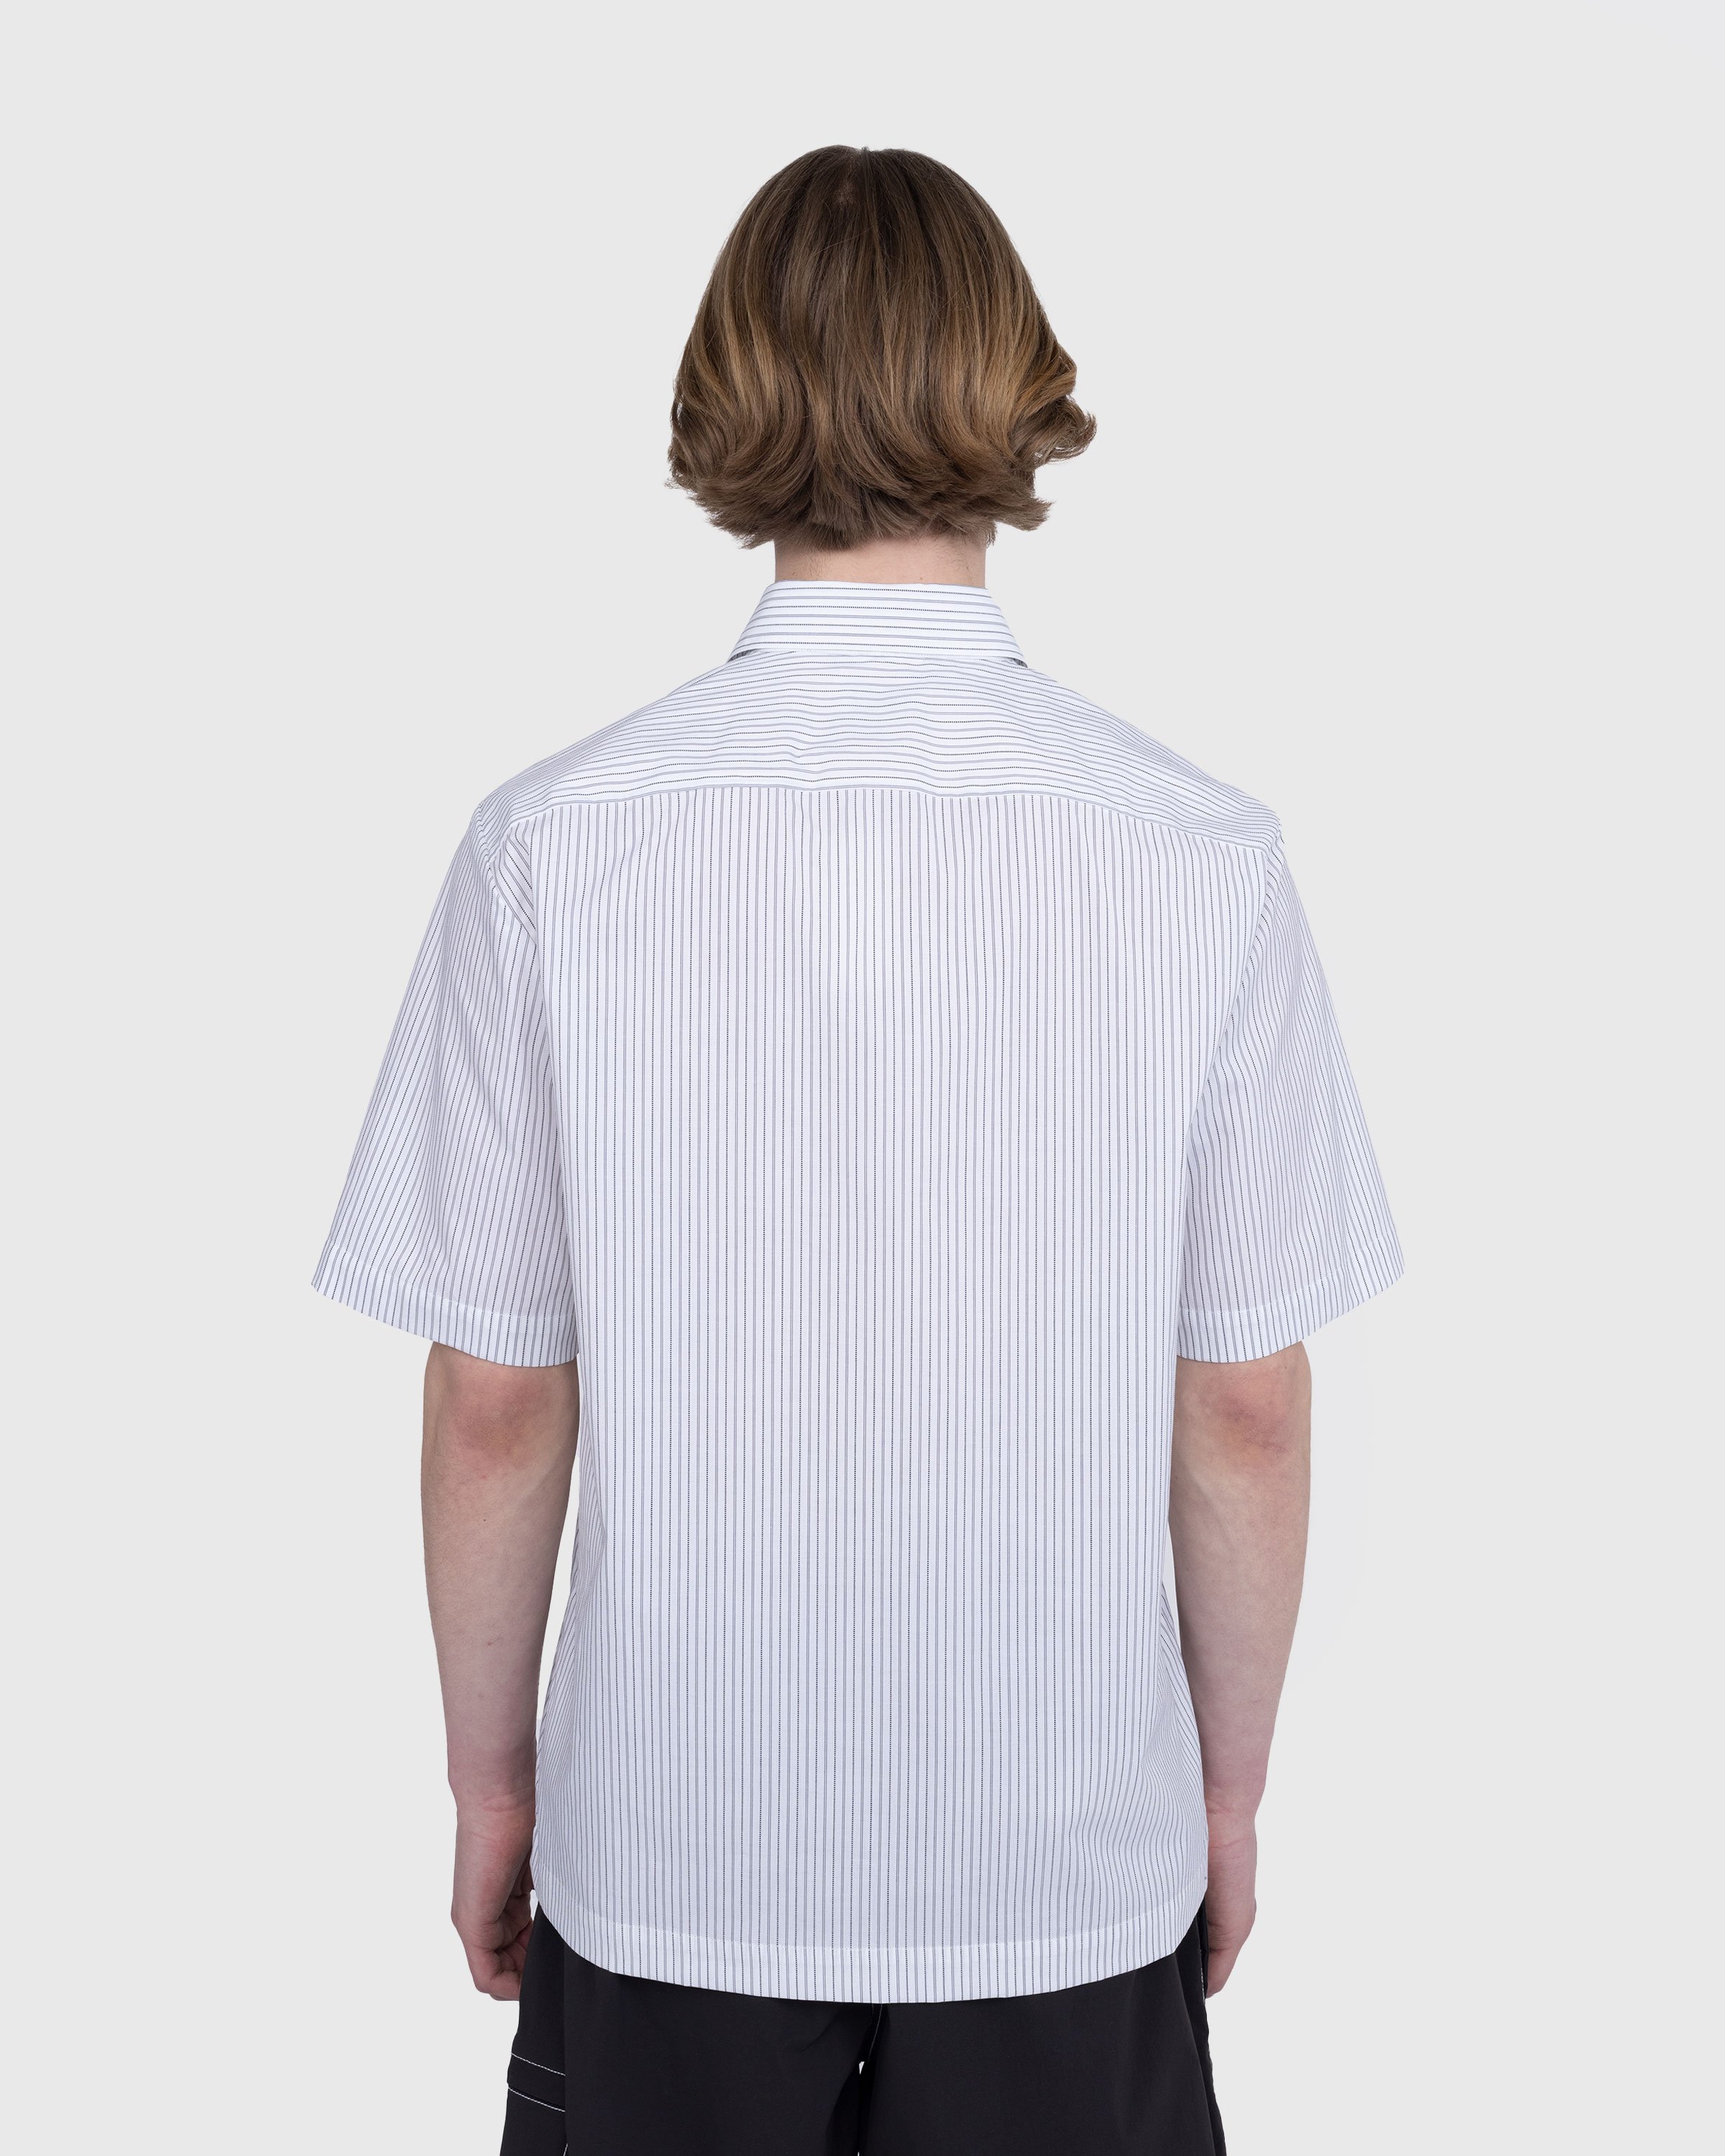 Dries van Noten - Clasen Shirt White - Clothing - White - Image 3